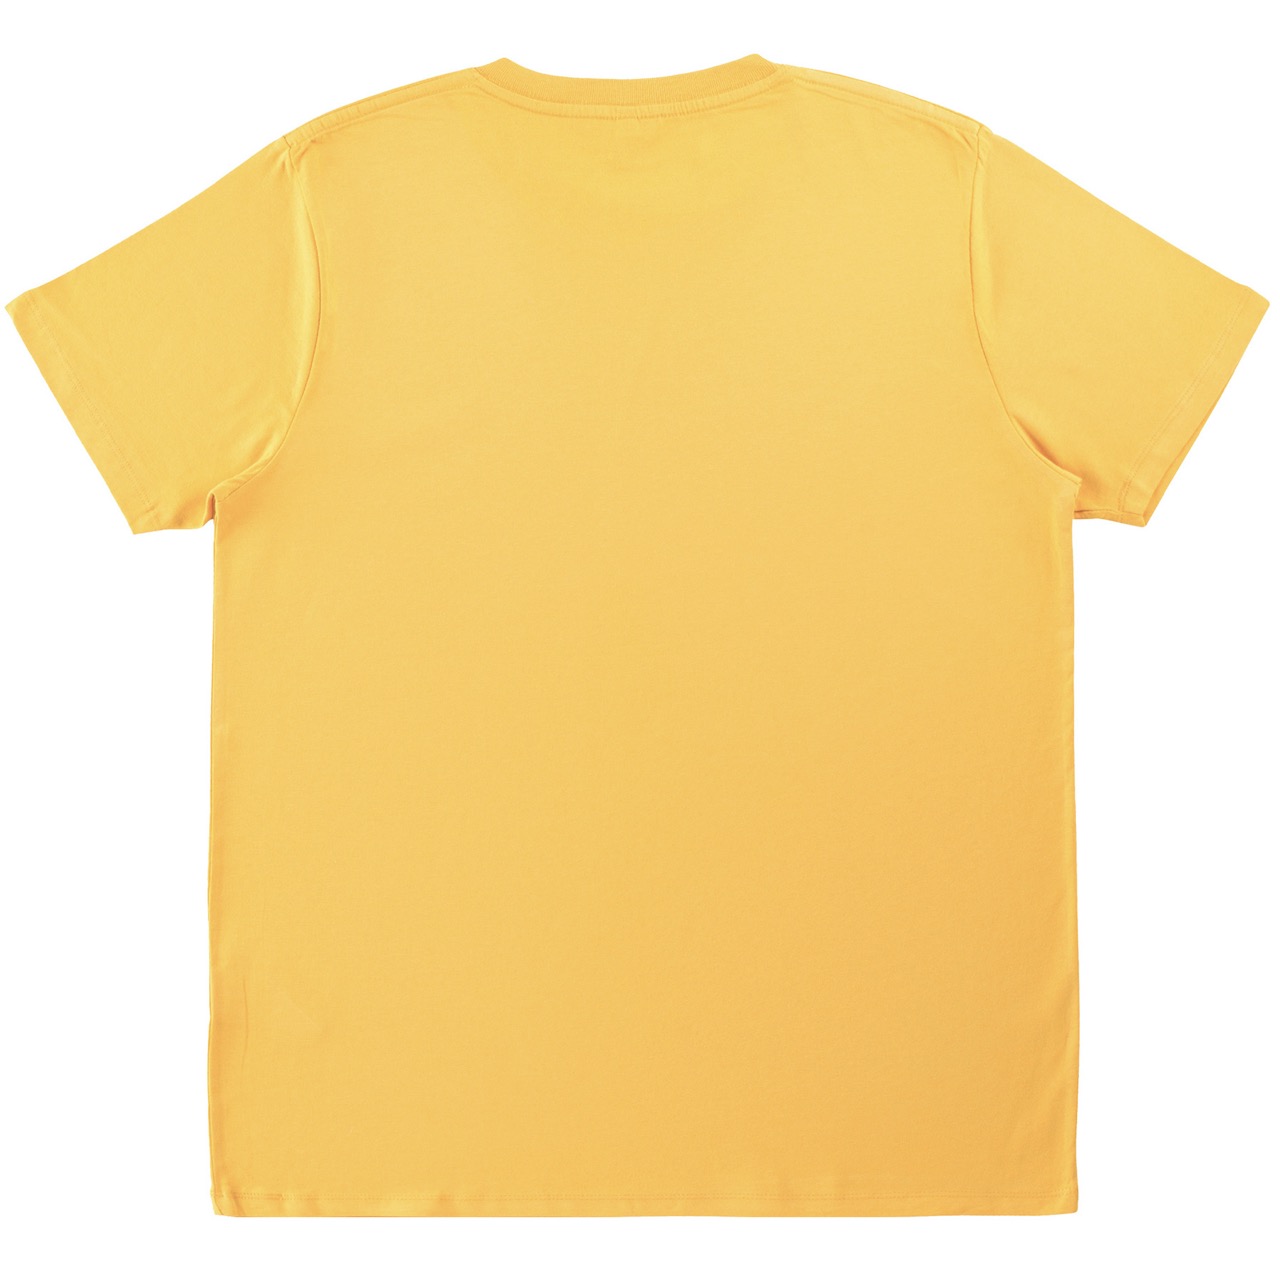 Contratista amanecer Amedrentador Camiseta Amarilla Manga Corta Algodón Orgánico - Holocene Classics